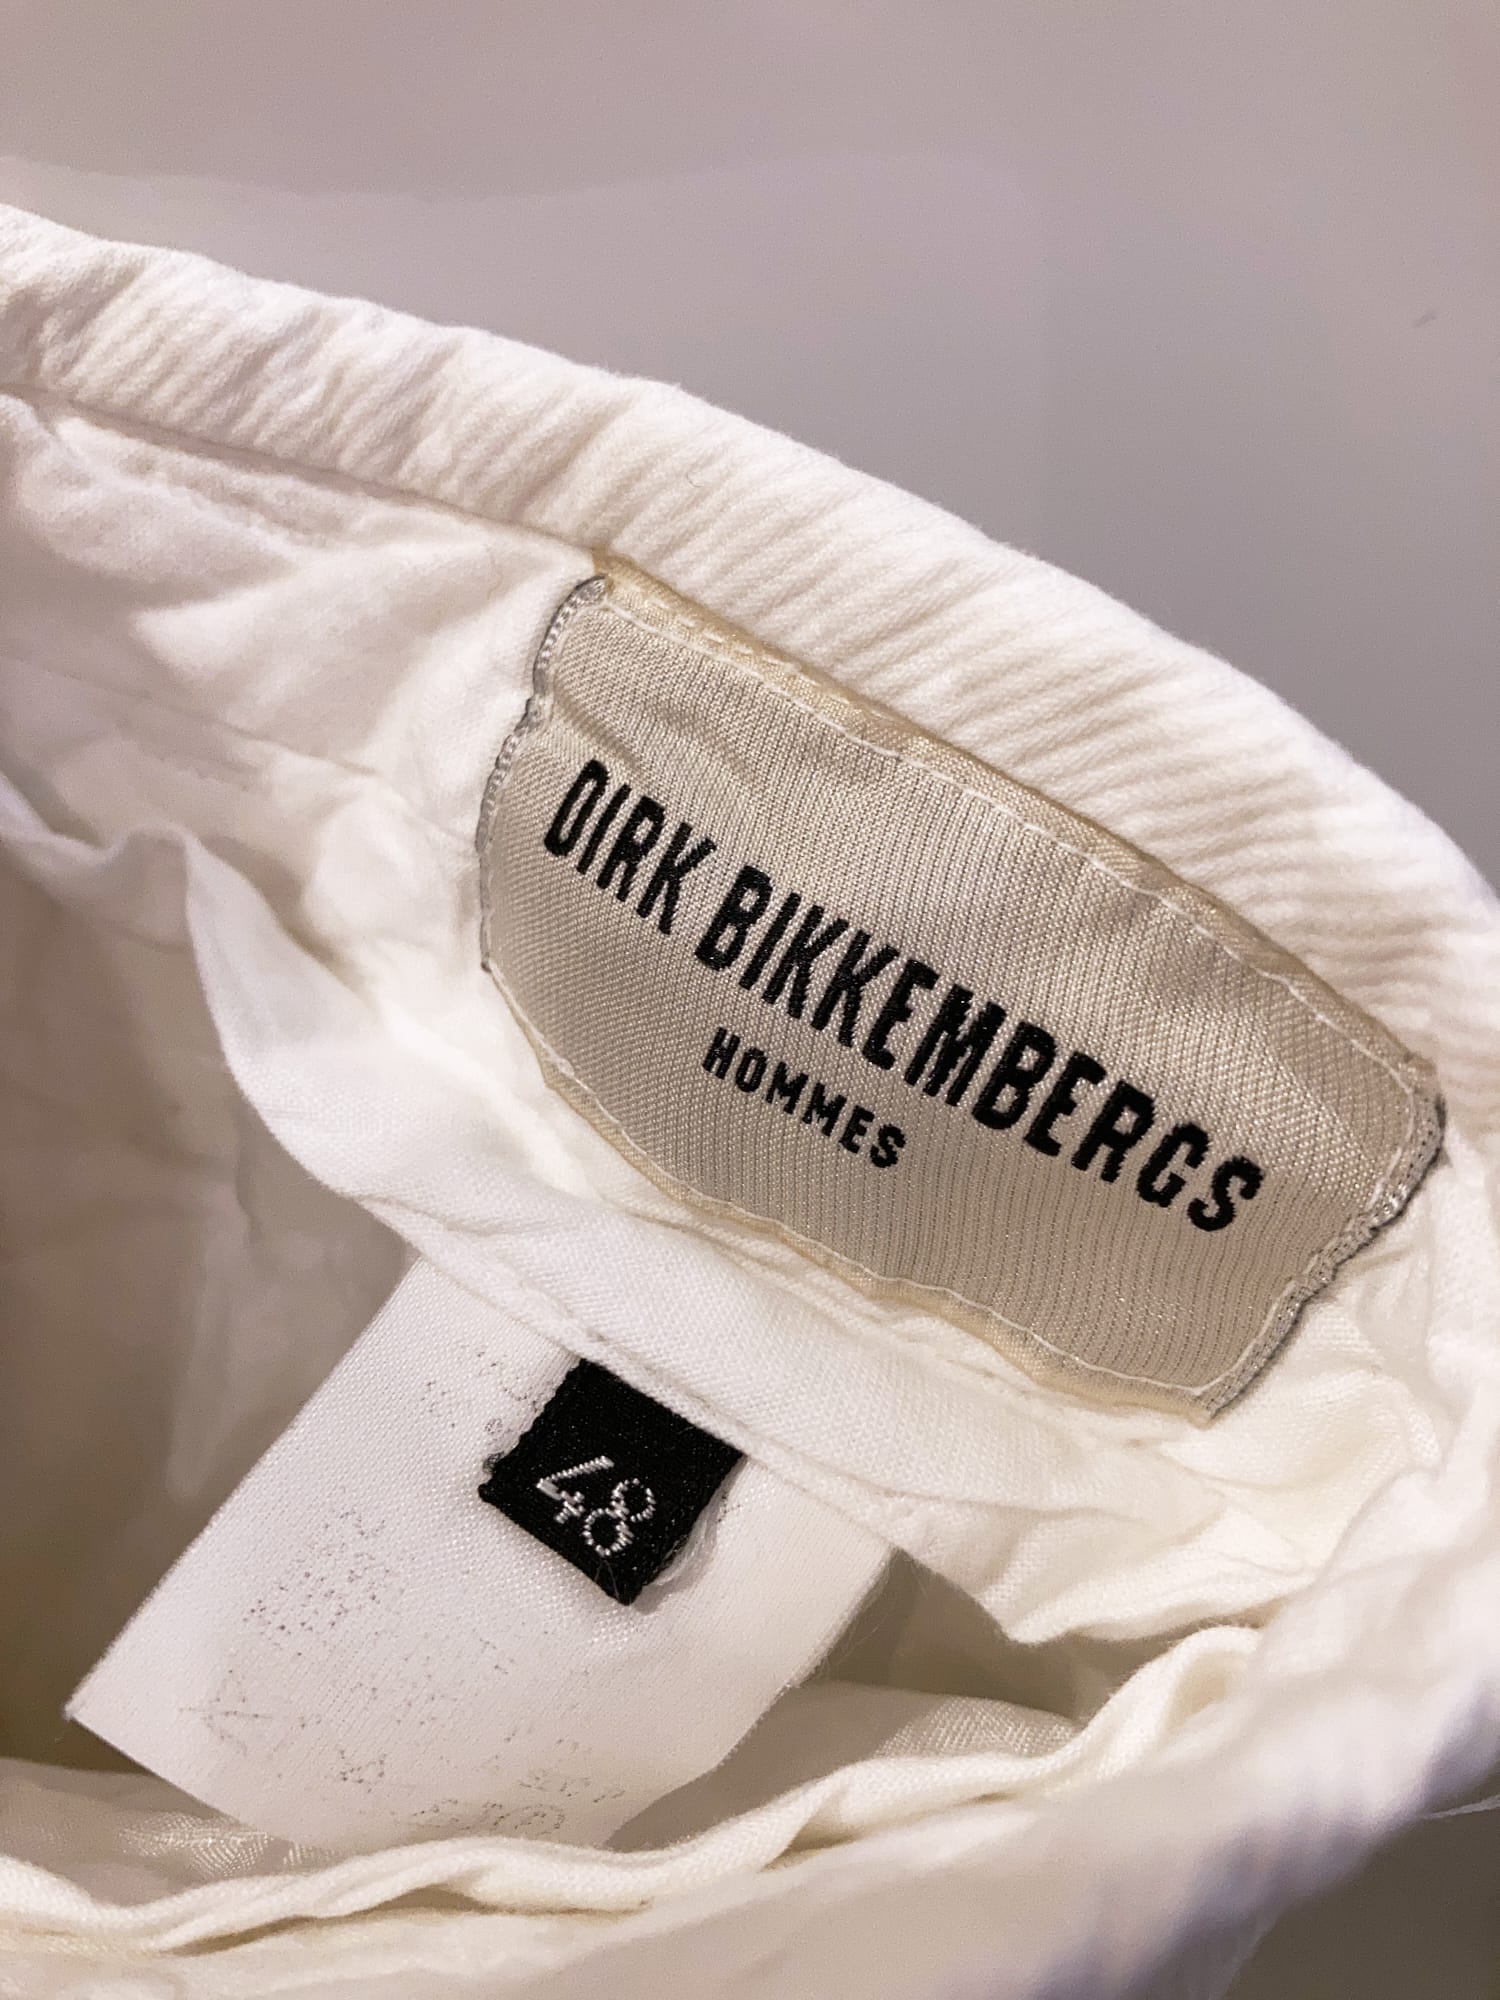 Dirk Bikkembergs Hommes spring 1997 white corduroy wide leg trousers - size 48